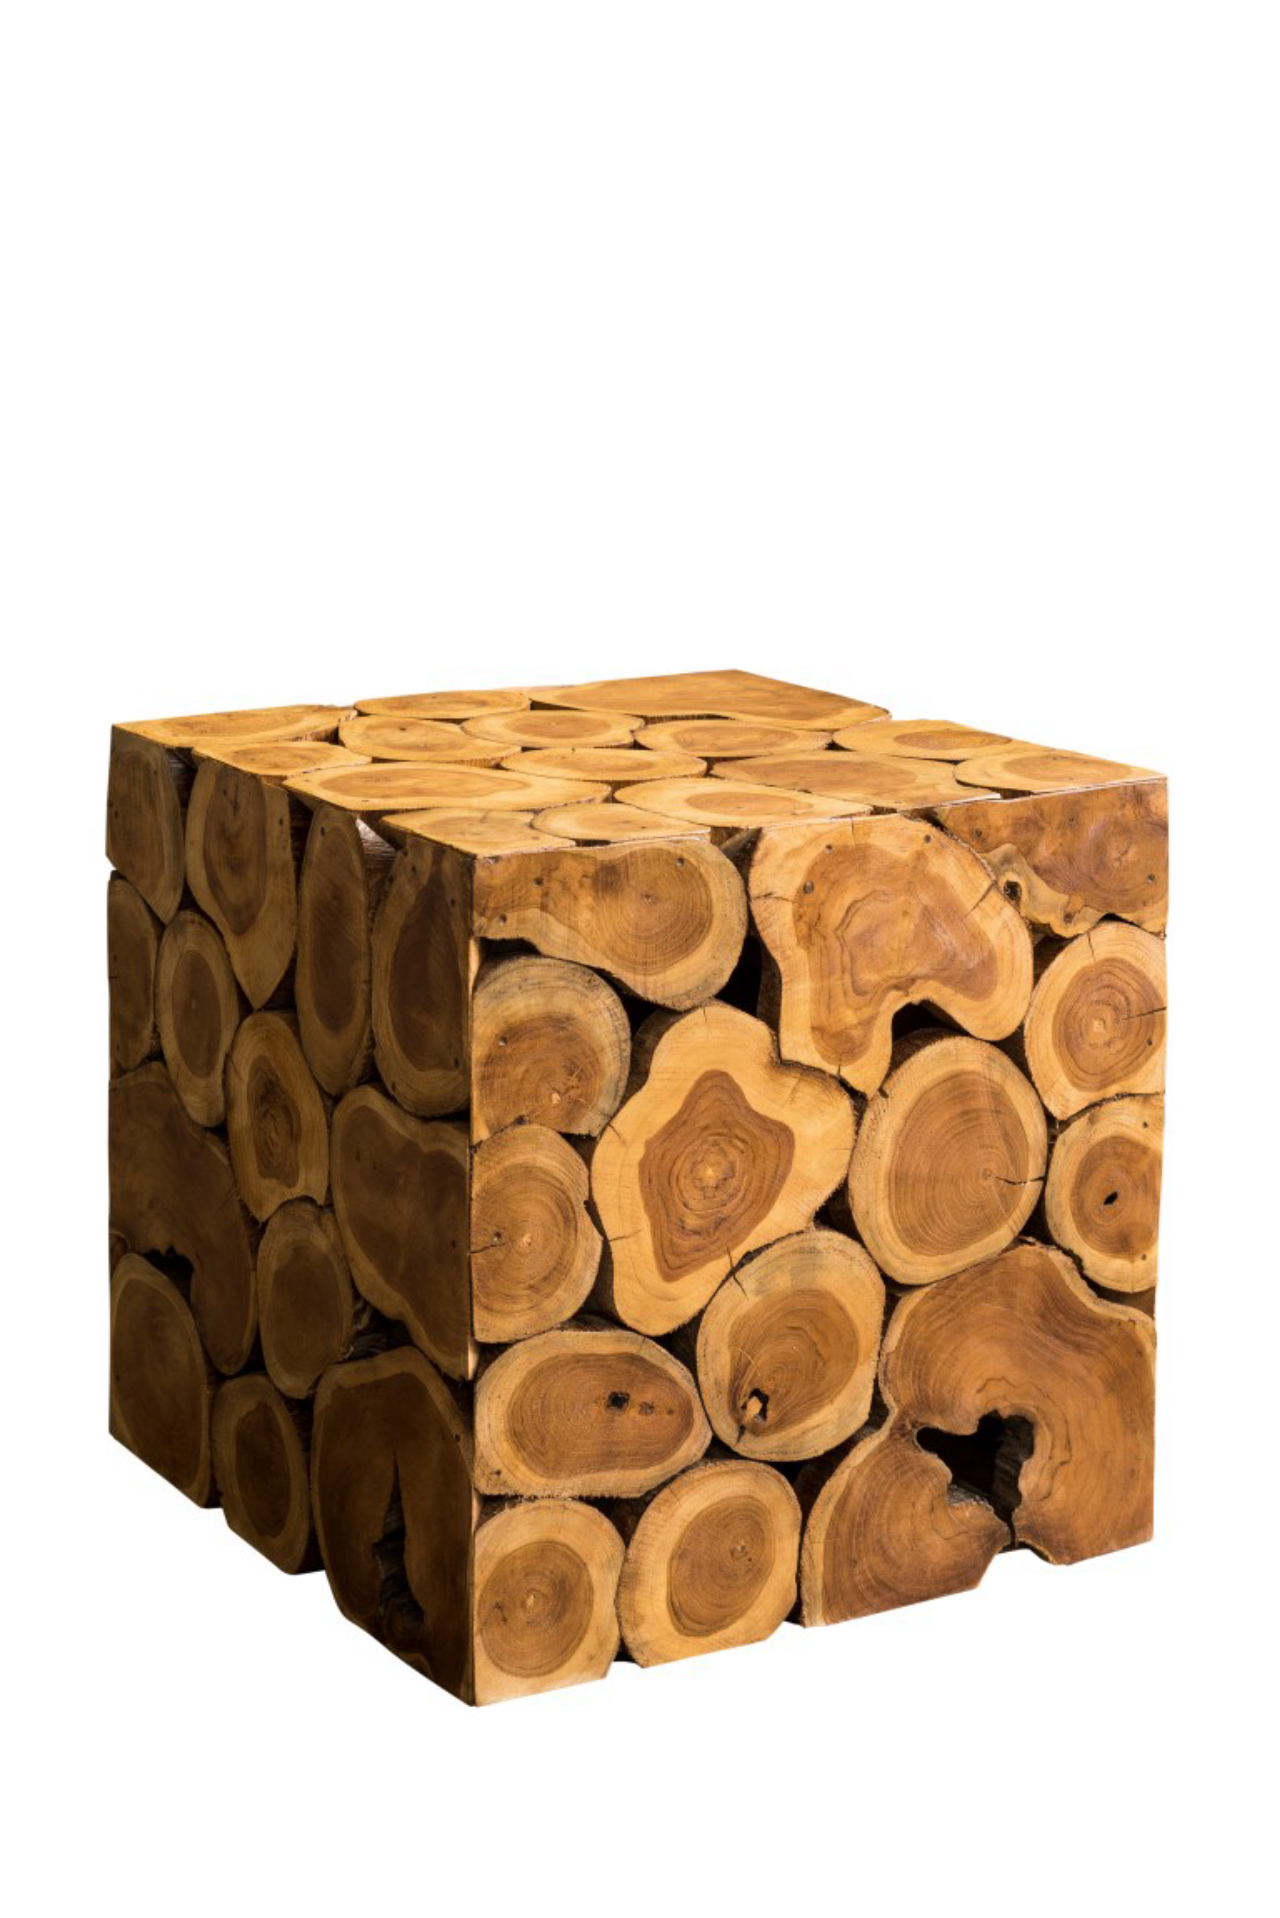 O cubo com mosaico de madeira serve como banco ou como mesa de apoio. 